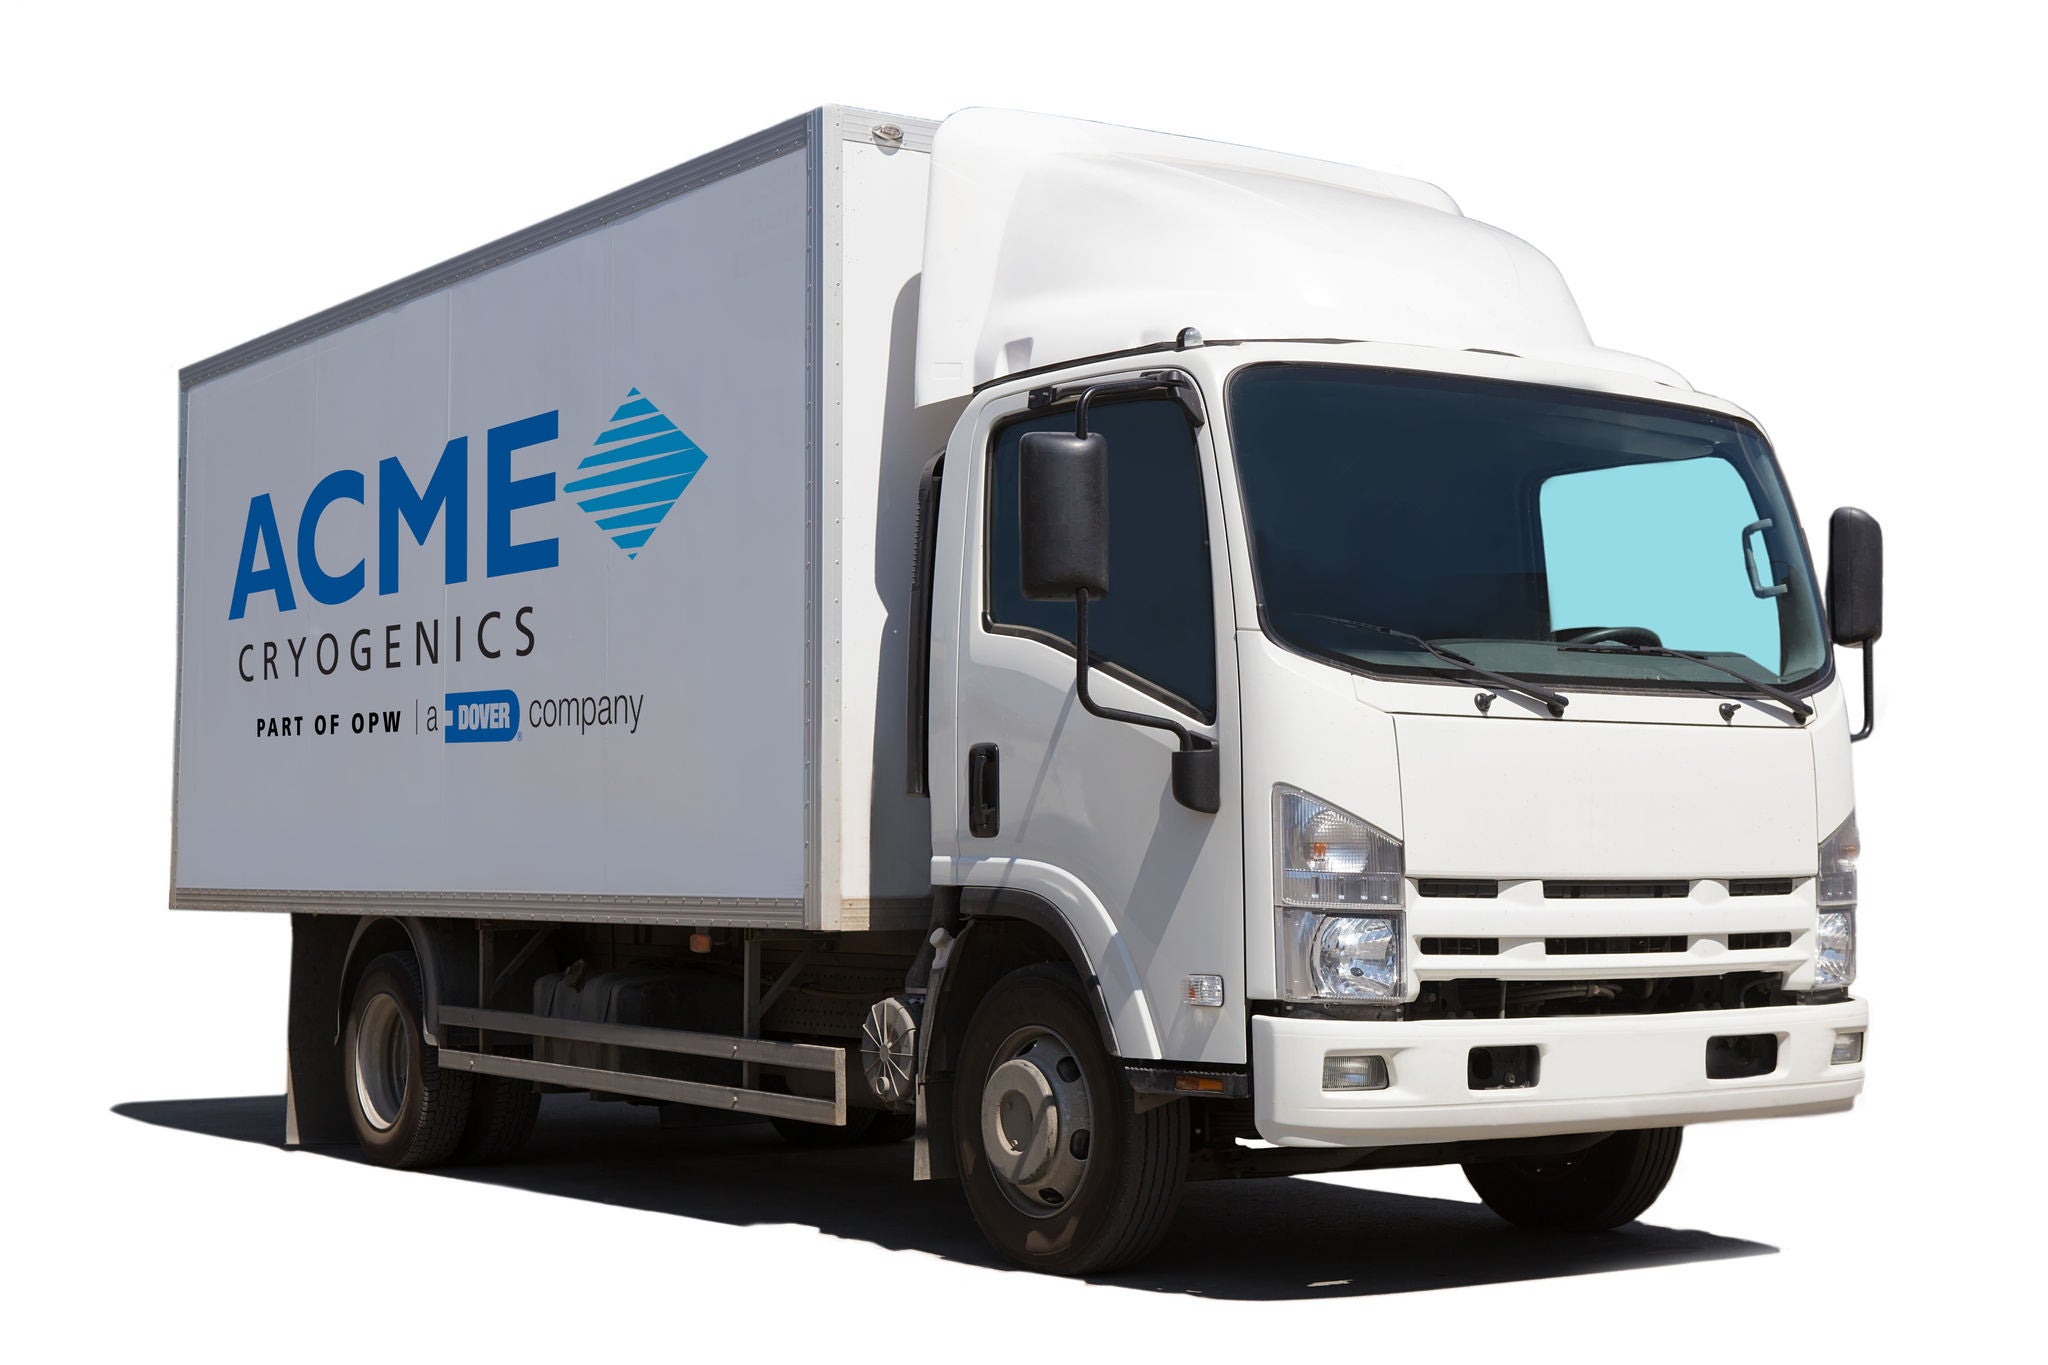 ACME cryogenics field service truck